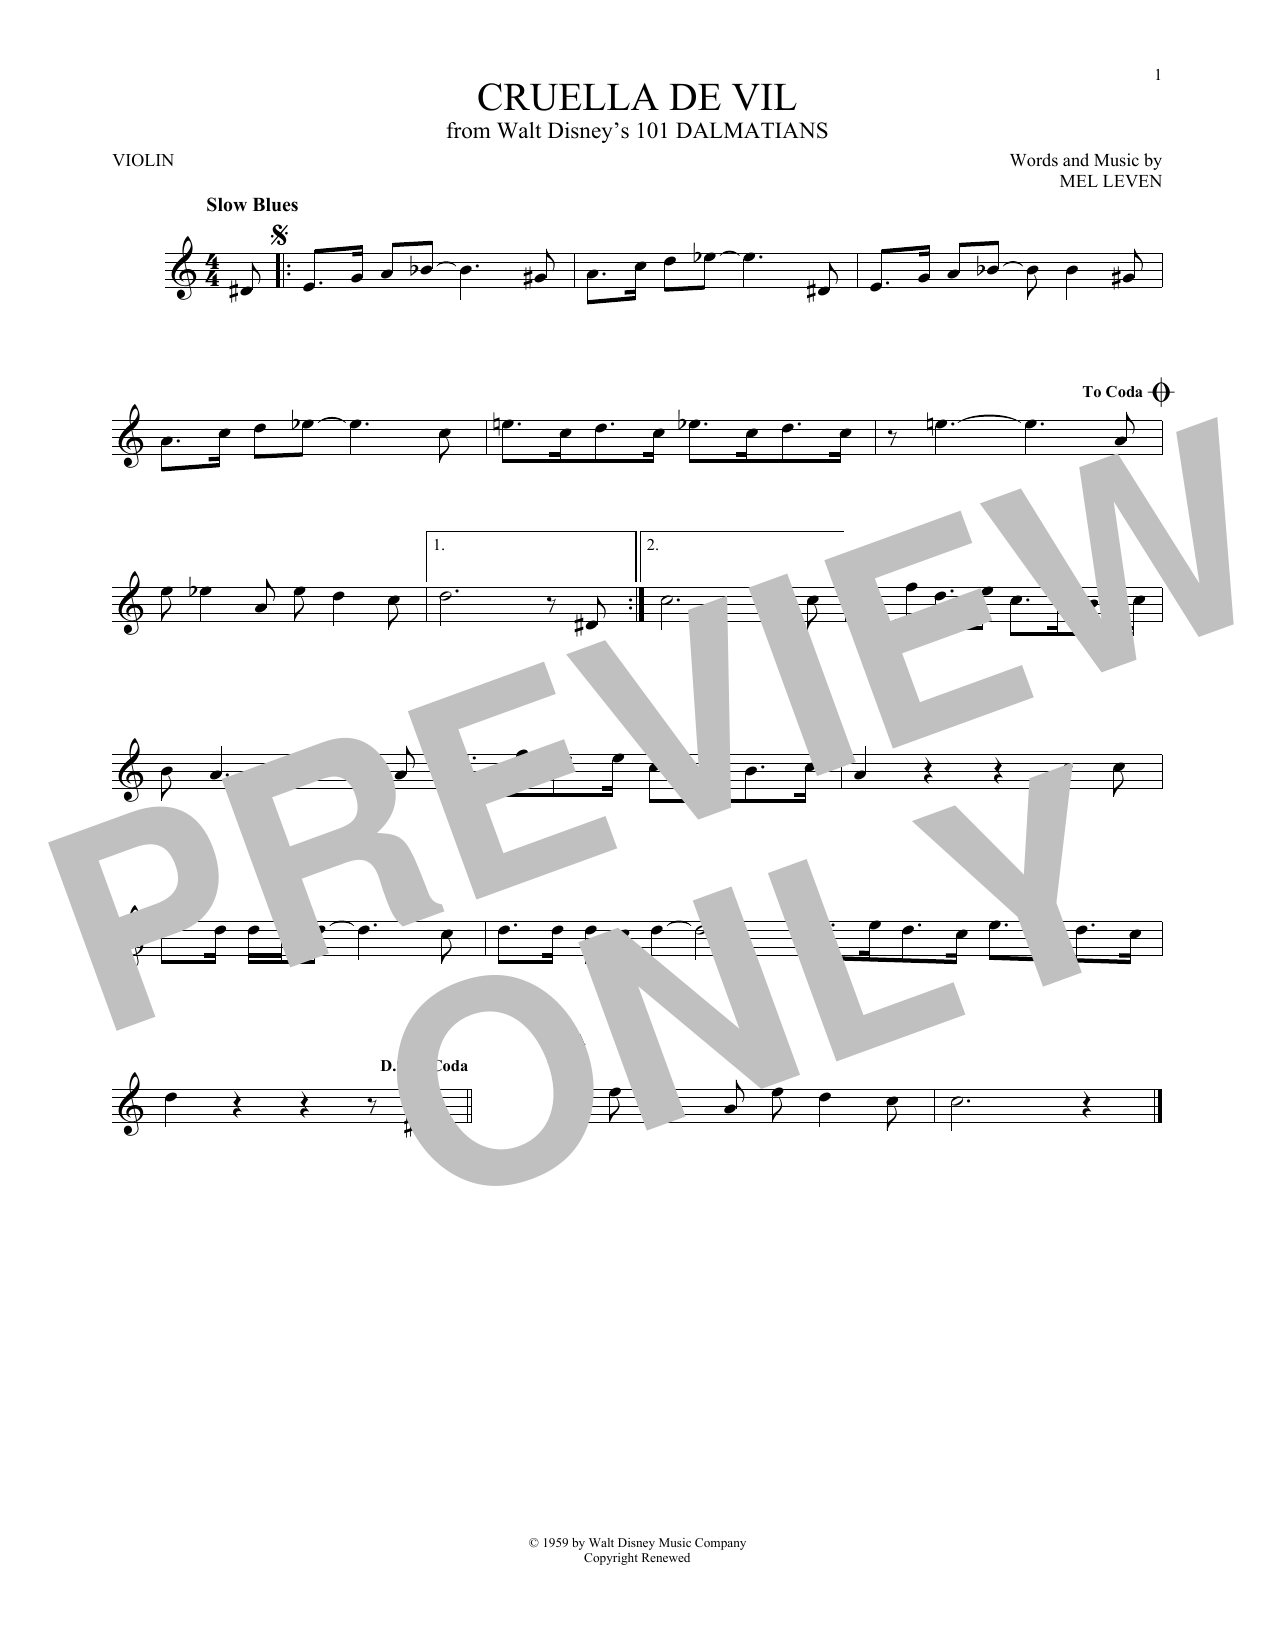 Mel Leven Cruella De Vil Sheet Music Notes & Chords for Violin - Download or Print PDF